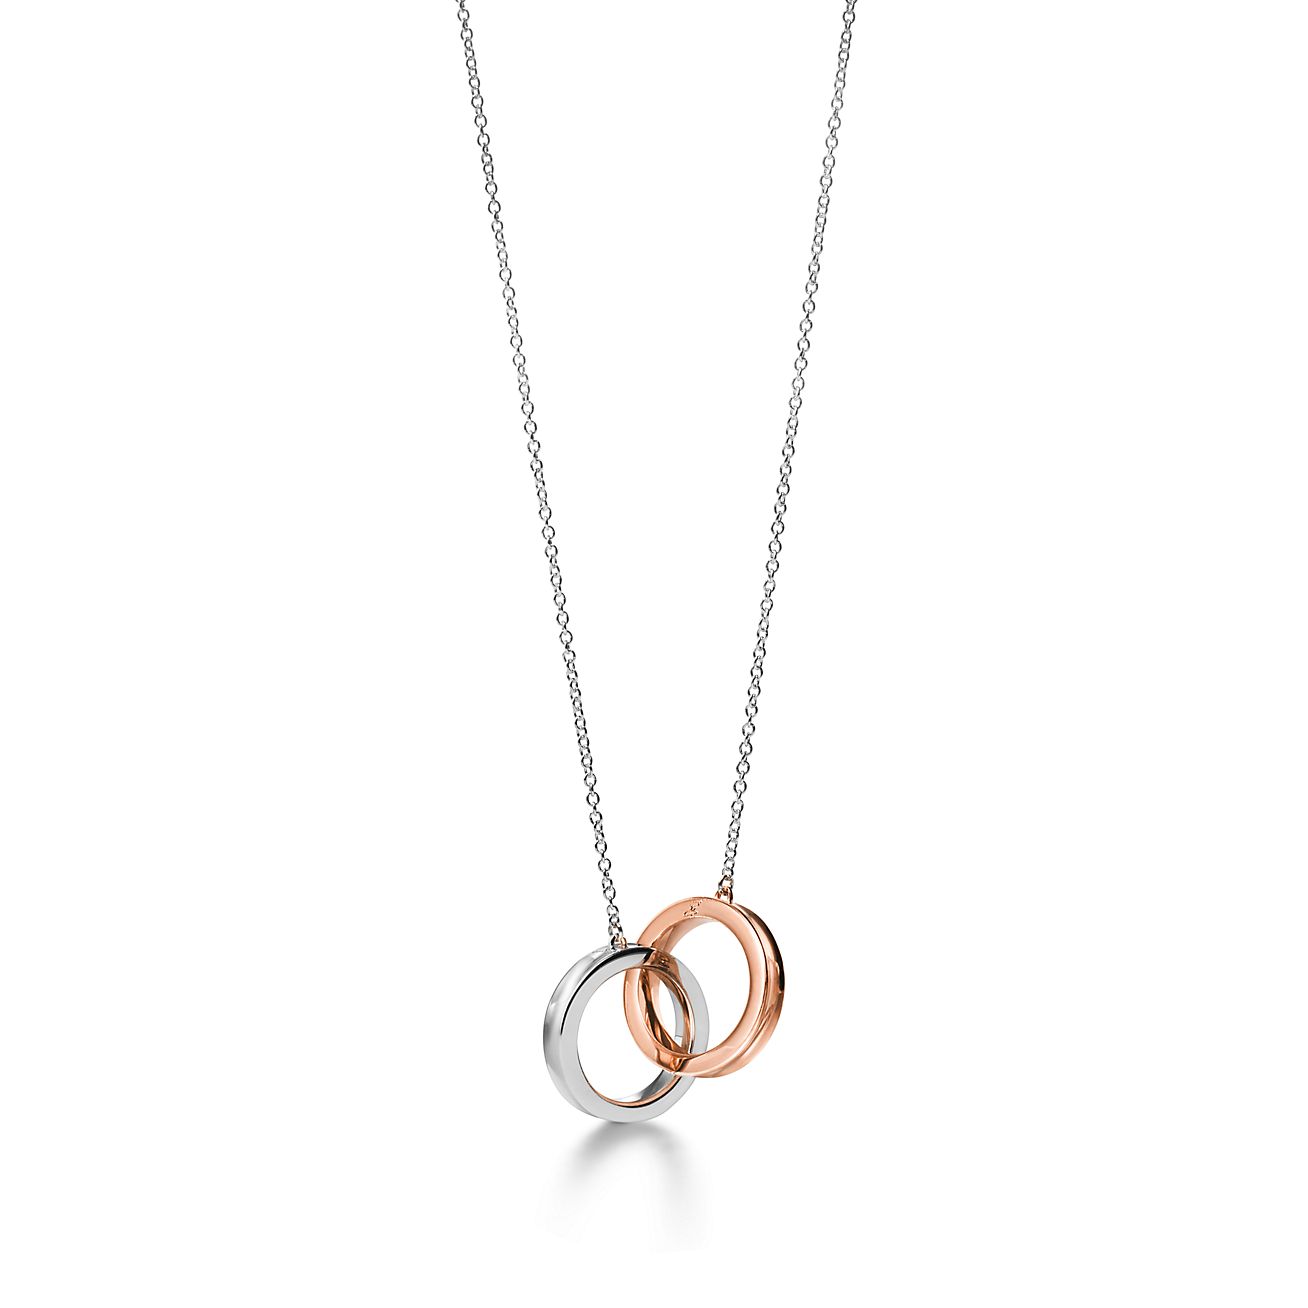 TIFFANY & Co. Elsa Peretti 18K Gold 12mm Eternal Circle Pendant Necklace  $1,700 | eBay